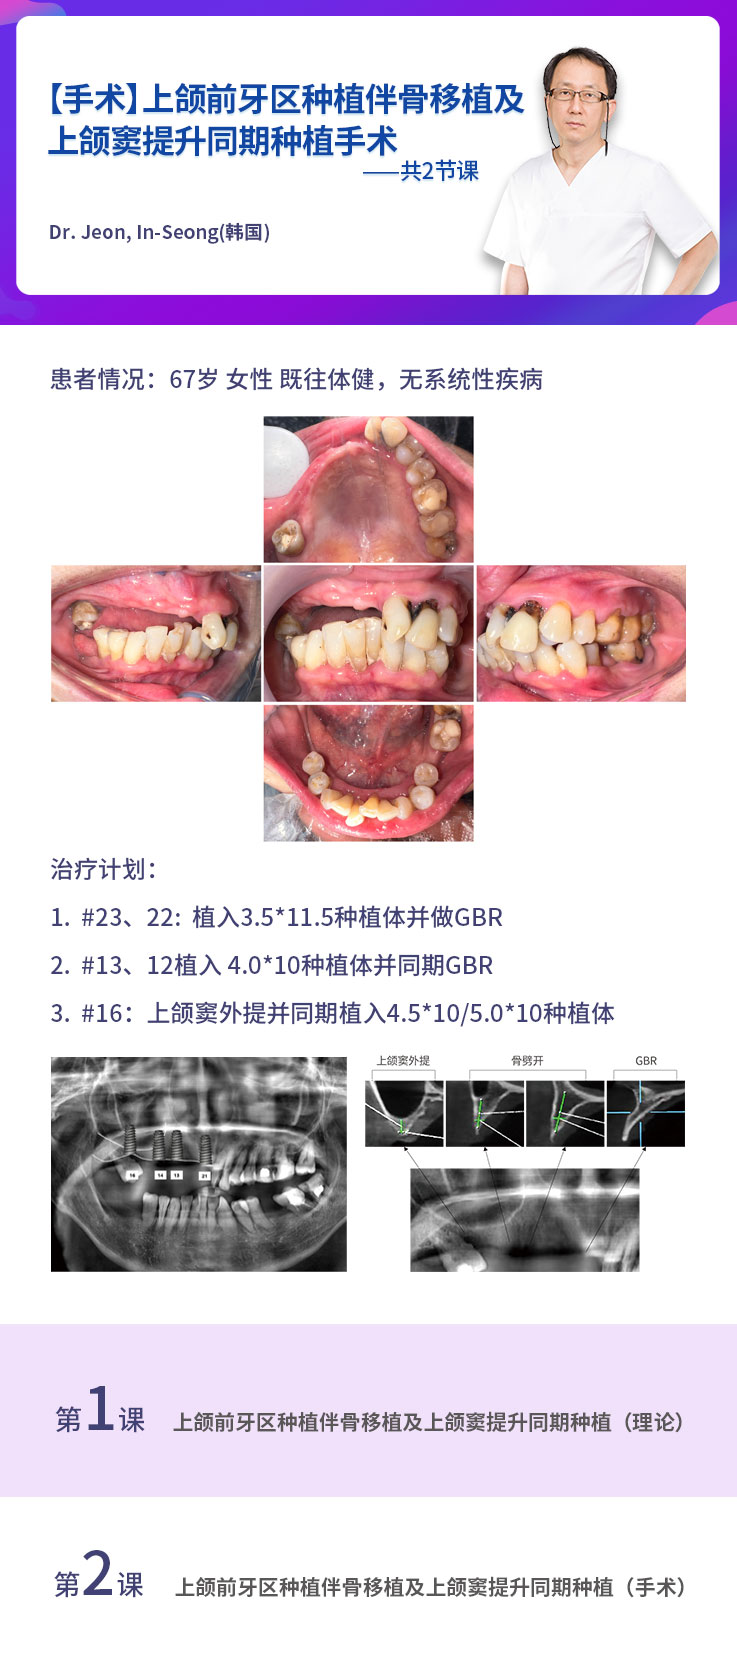 【4】【B56】上颌前牙区种植伴骨移植及上颌窦提升同期种植手术-在线课程导图.jpg